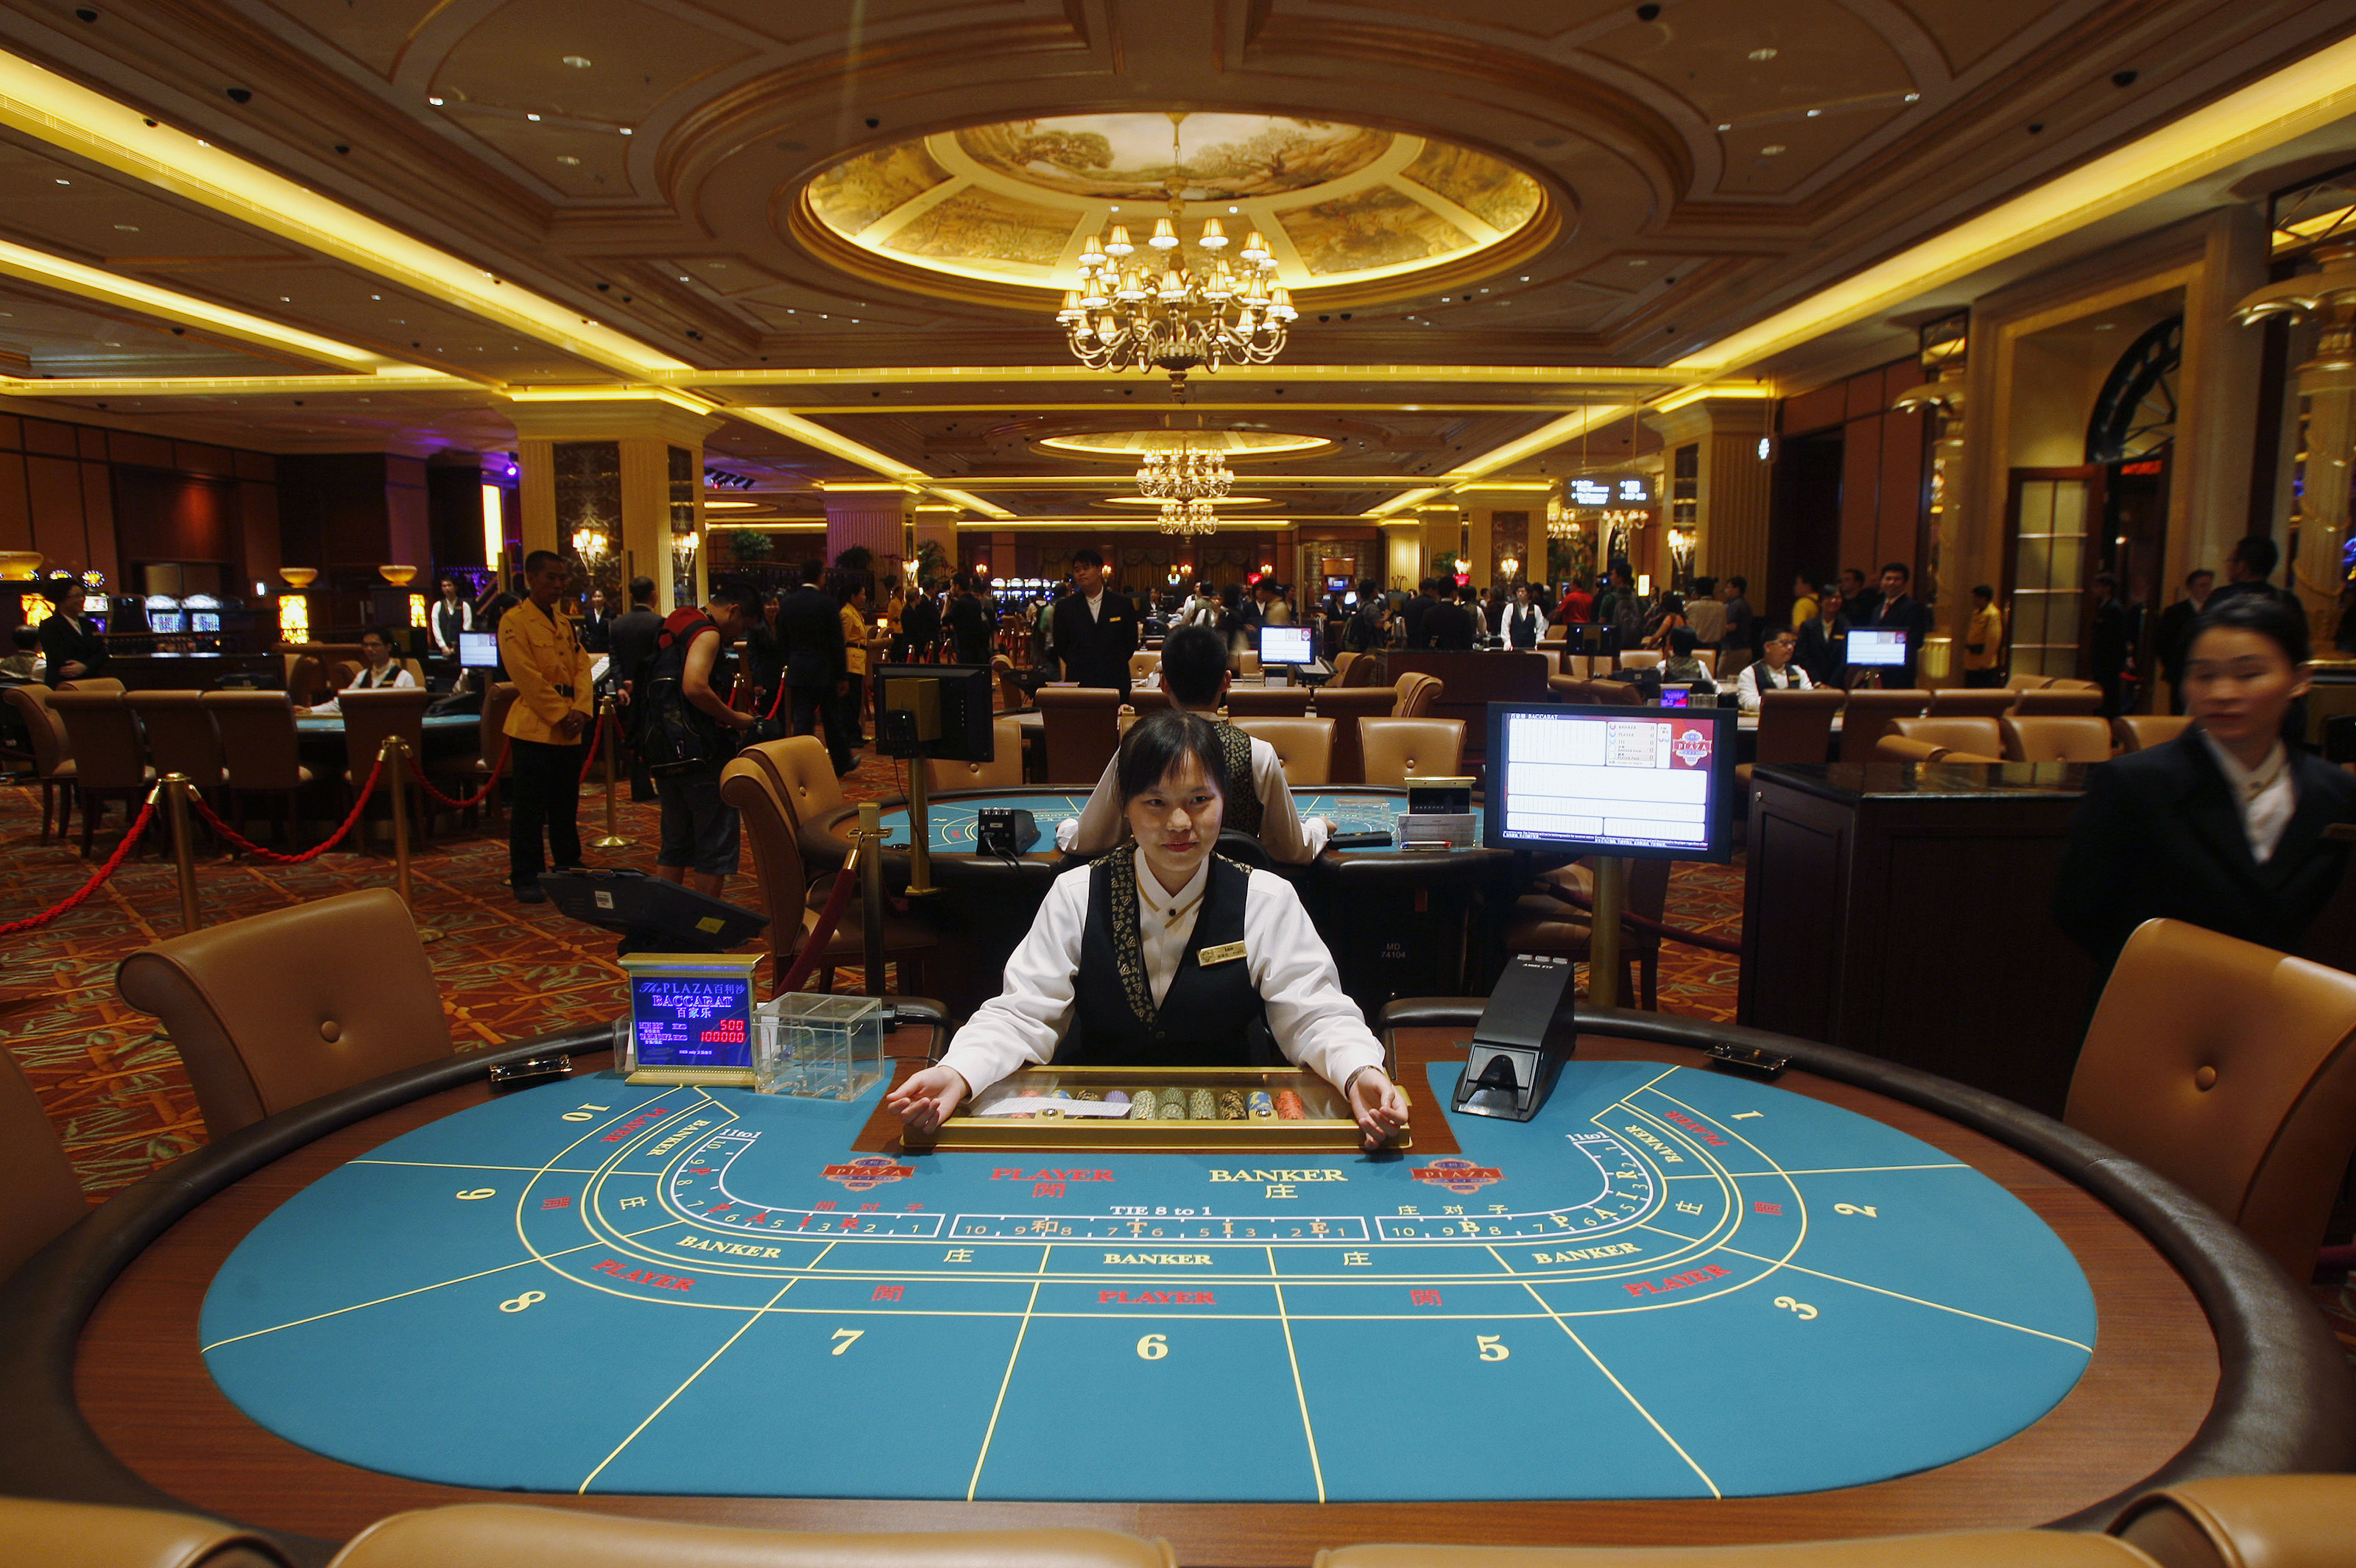 online casino dealer malaysia forum